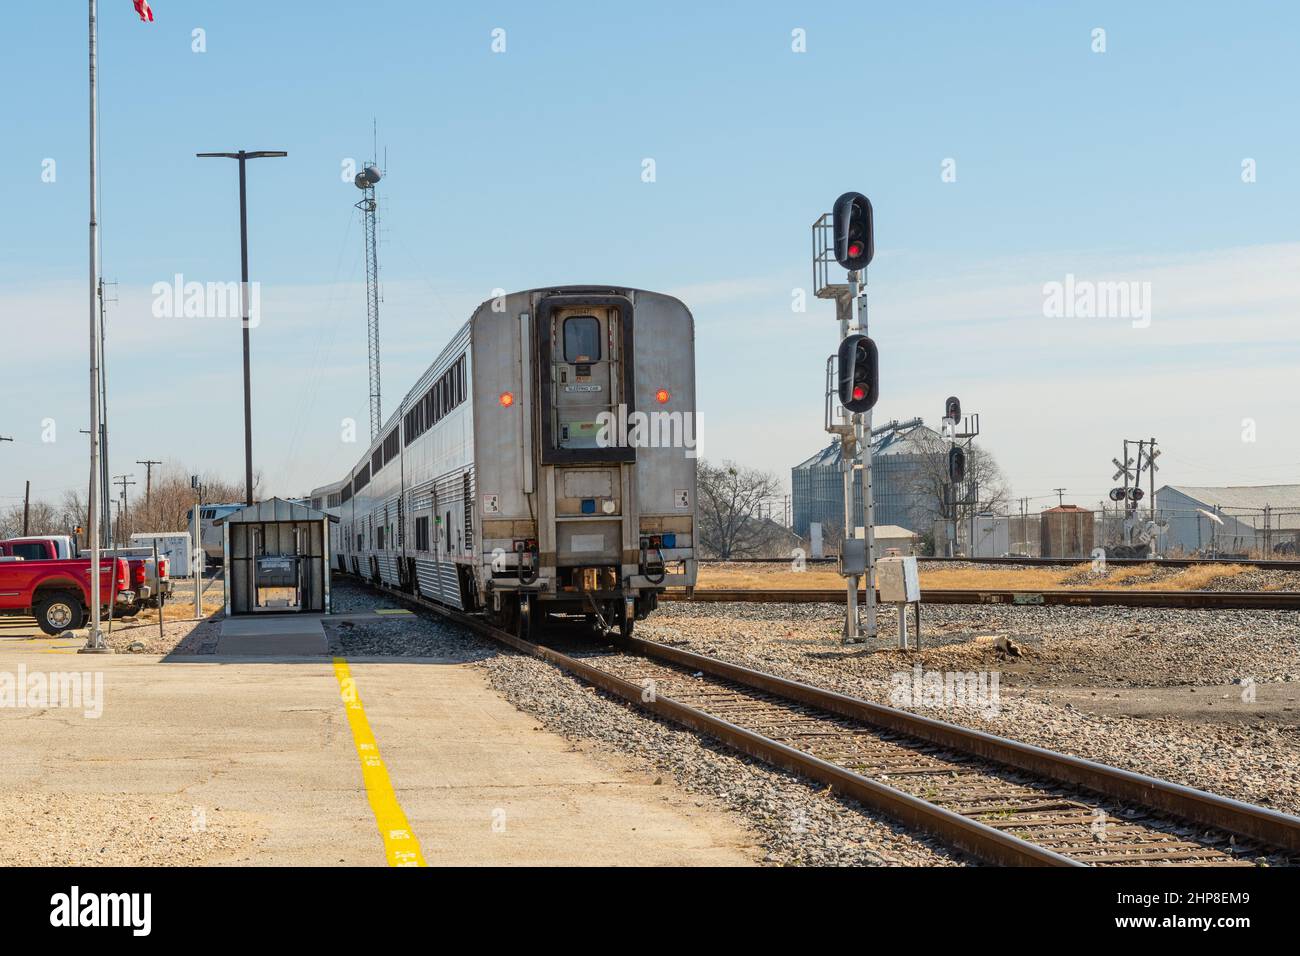 American passenger train Amtrak Texas Eagle passenger coaches departing small Texas passenger station platform Stock Photo